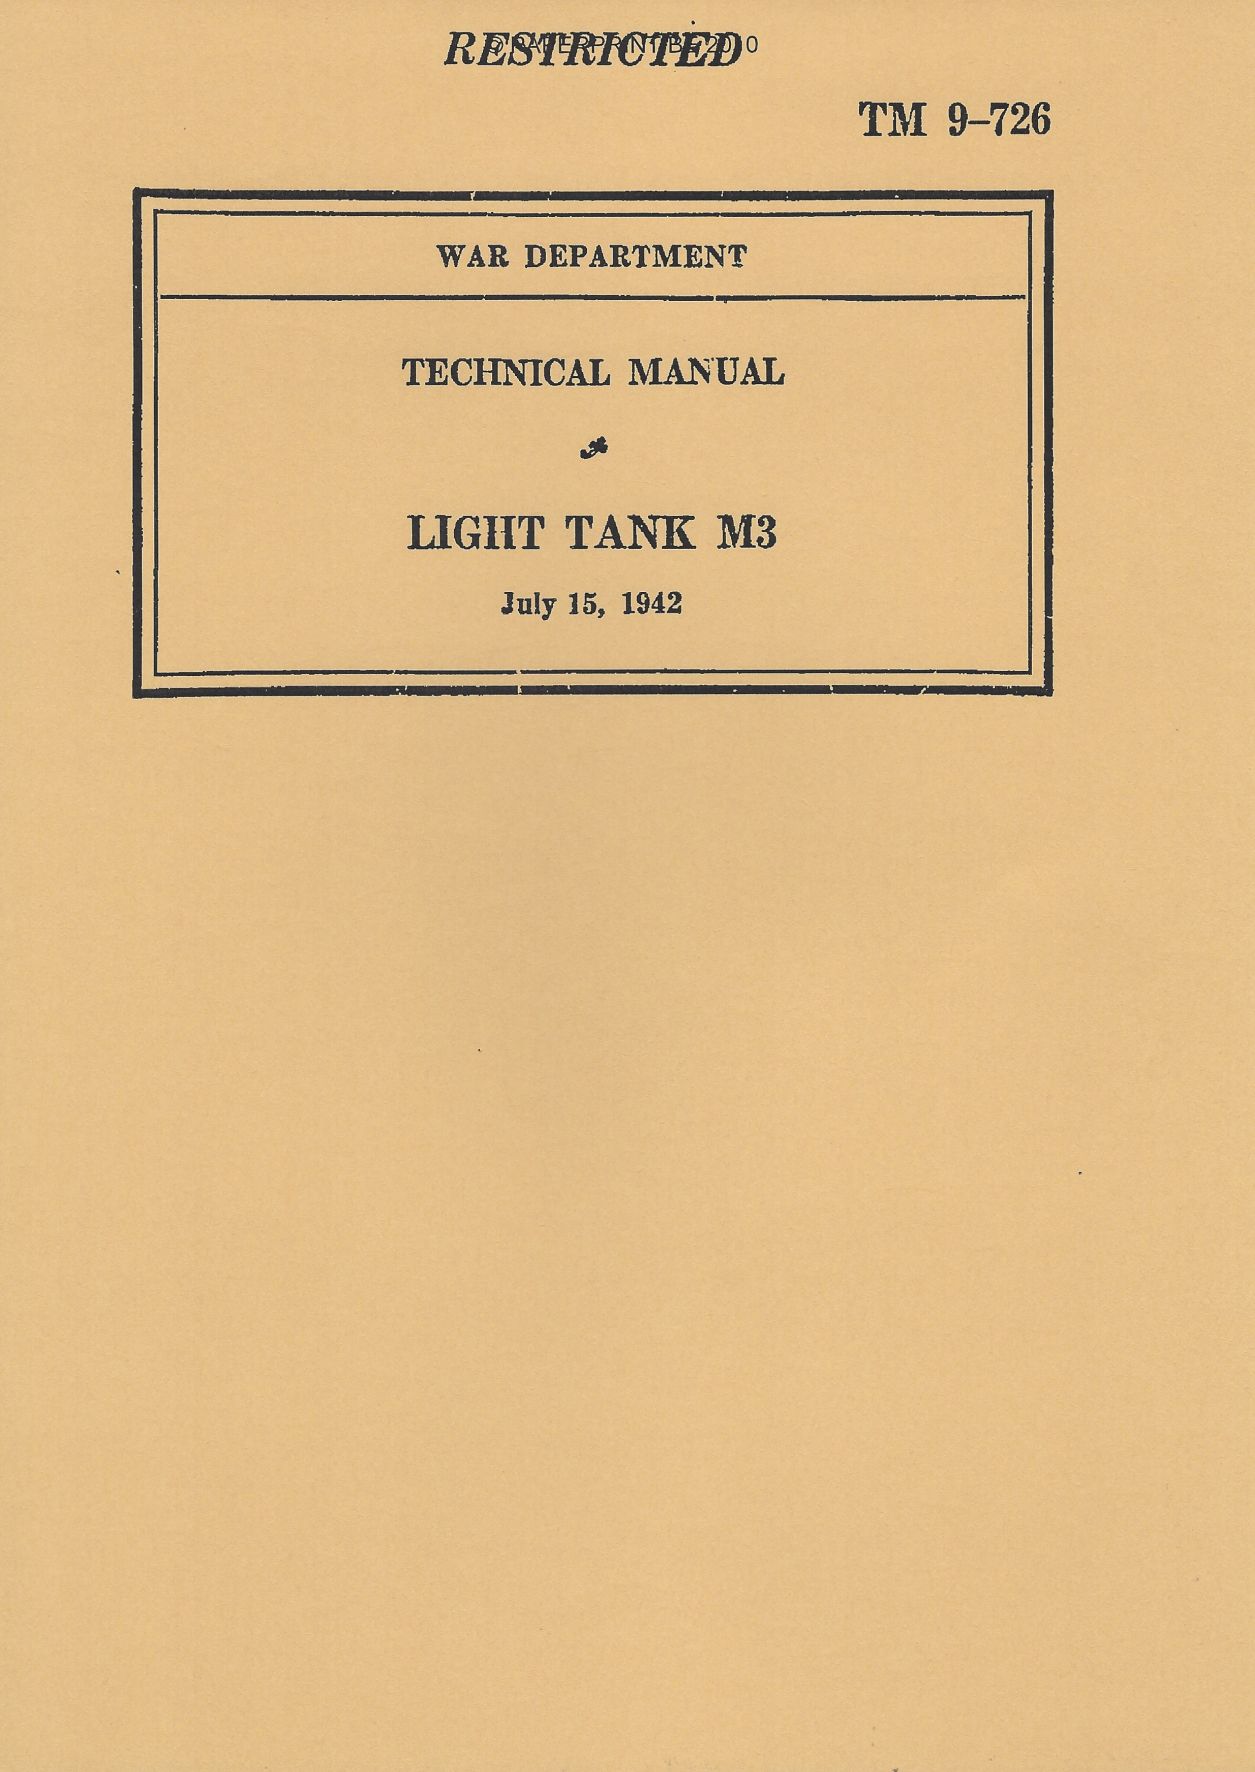 TM 9-726 US LIGHT TANK M3